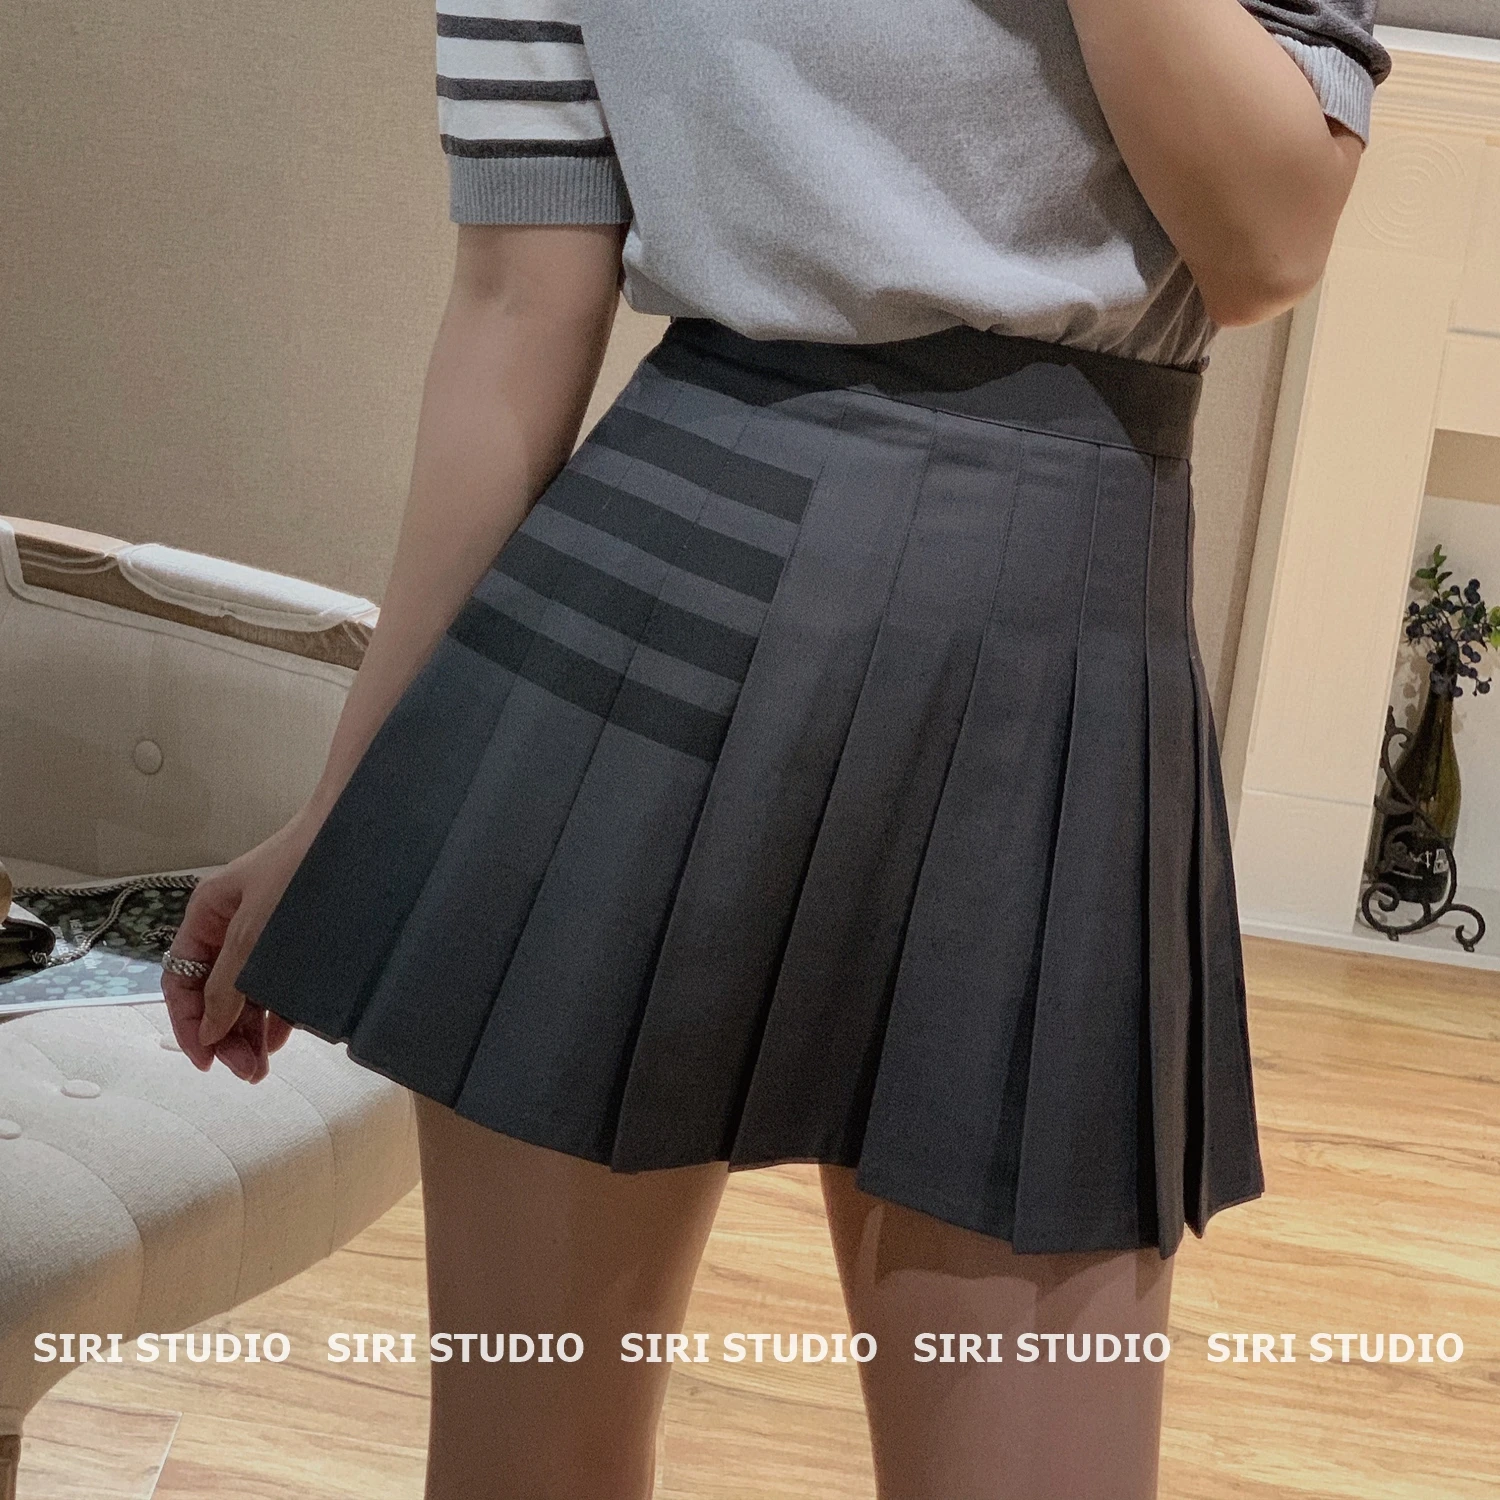 tb gray suit skirt high waist and thin A-line pleated skirt college style retro four-bar striped short skirt skirt women